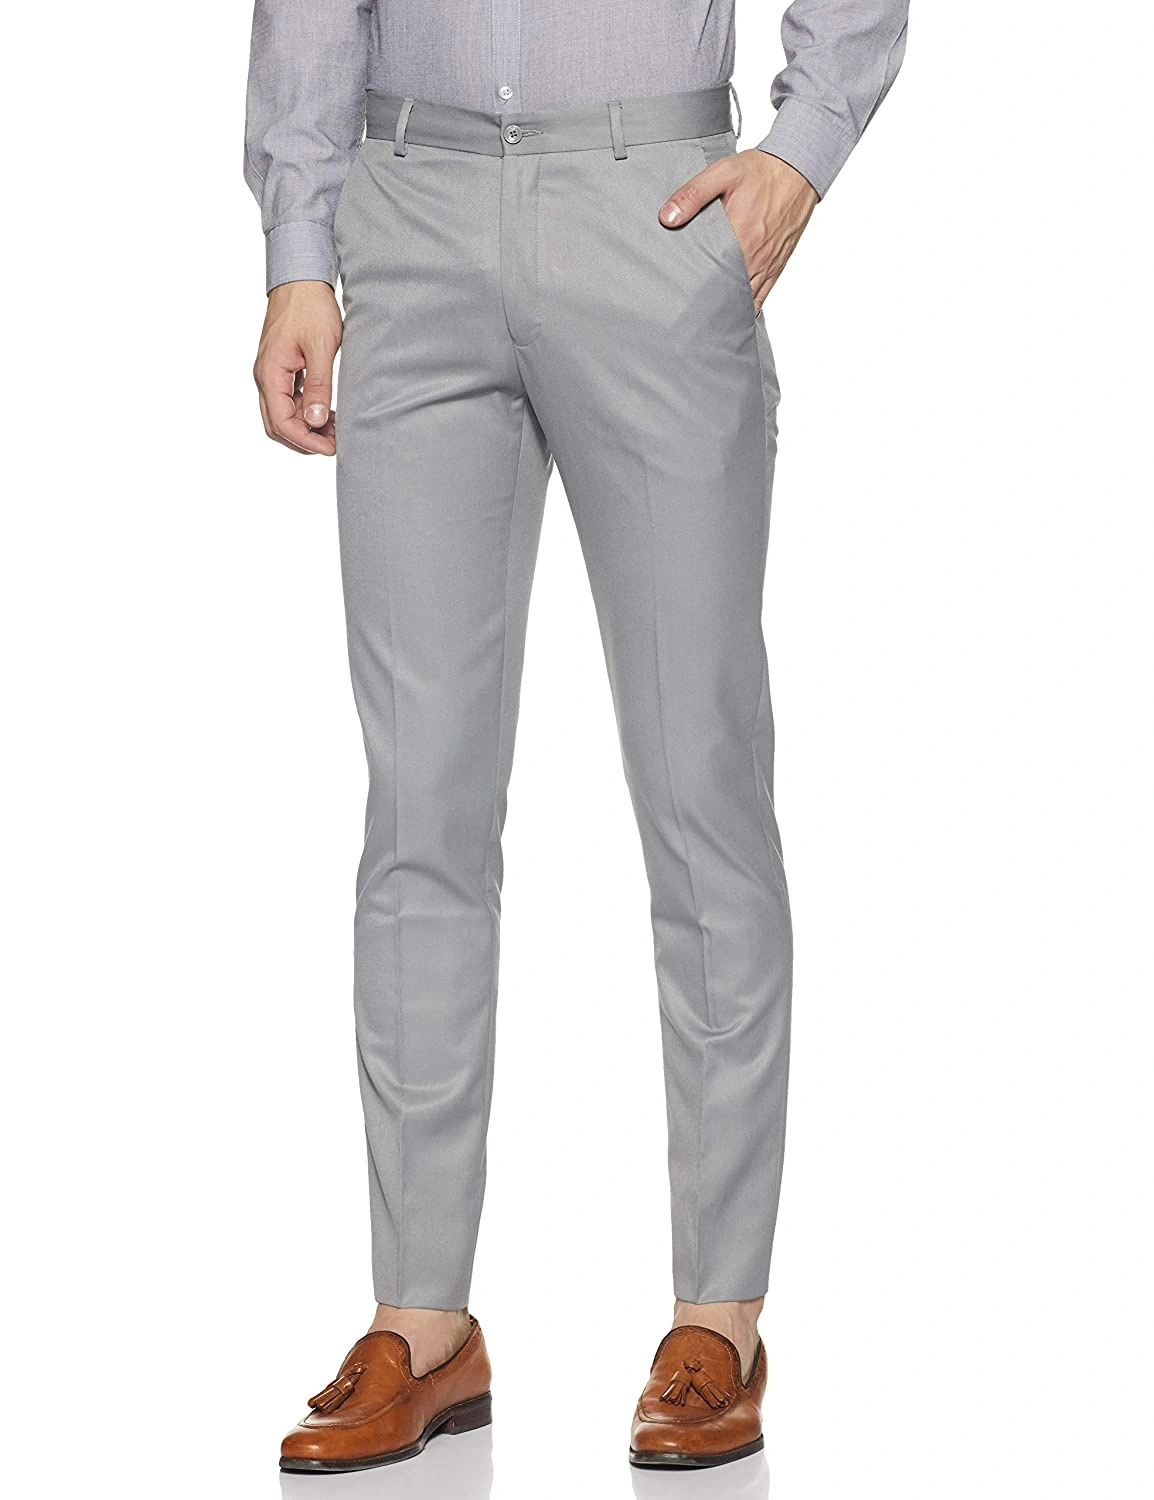 Formal Trouser Check Men Grey Cotton Formal Trouser on Cliths